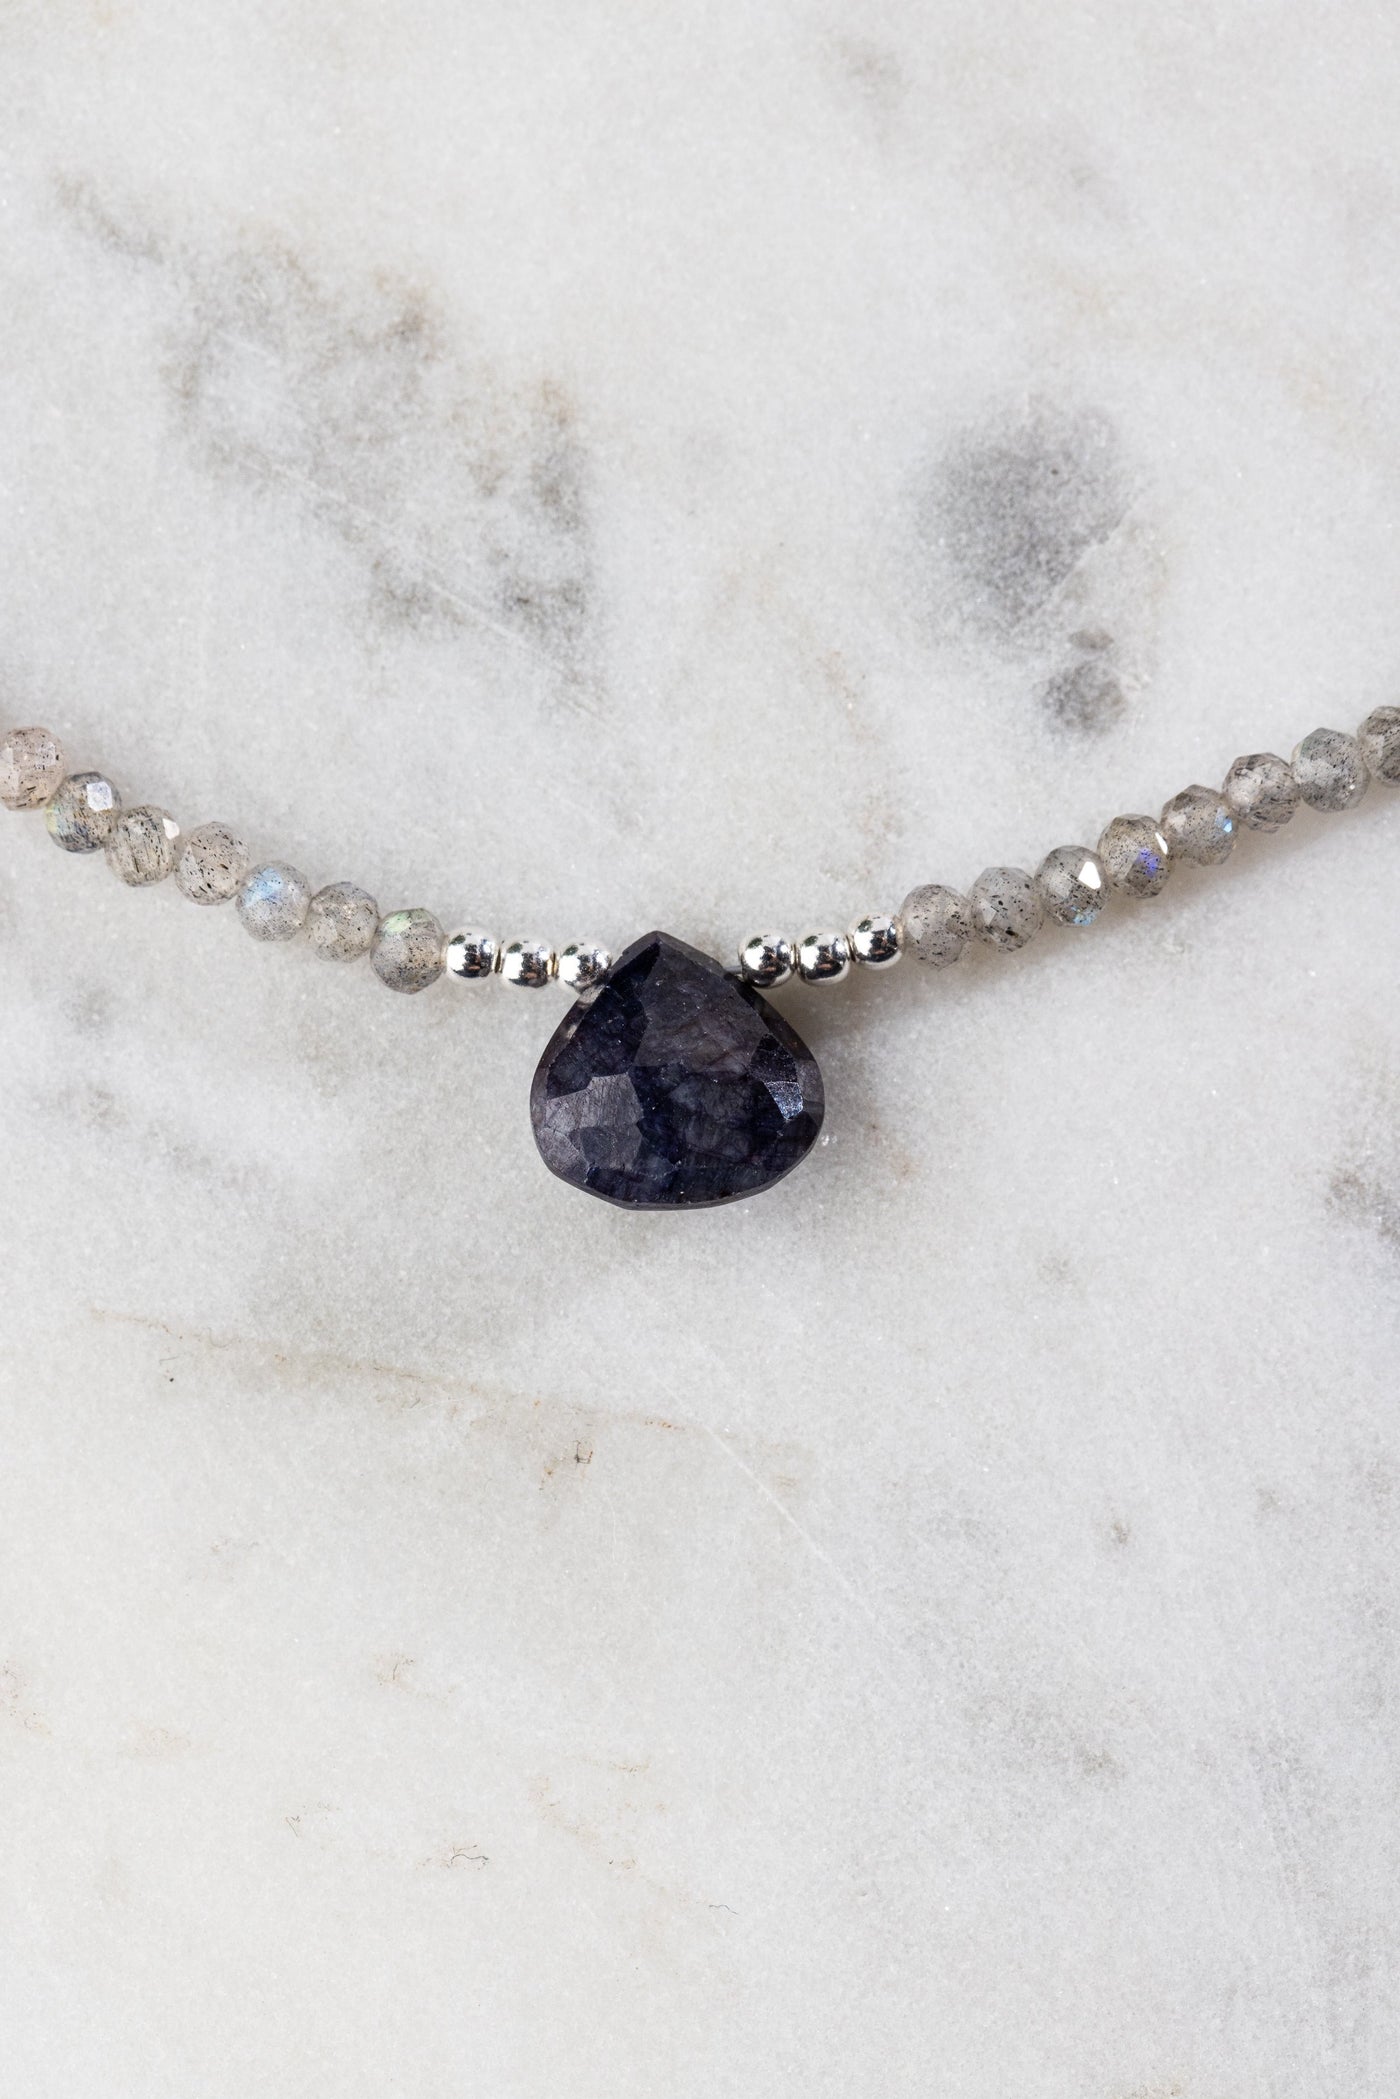 Sapphire Tear of Wisdom with Mystical Labradorite Signature Necklace